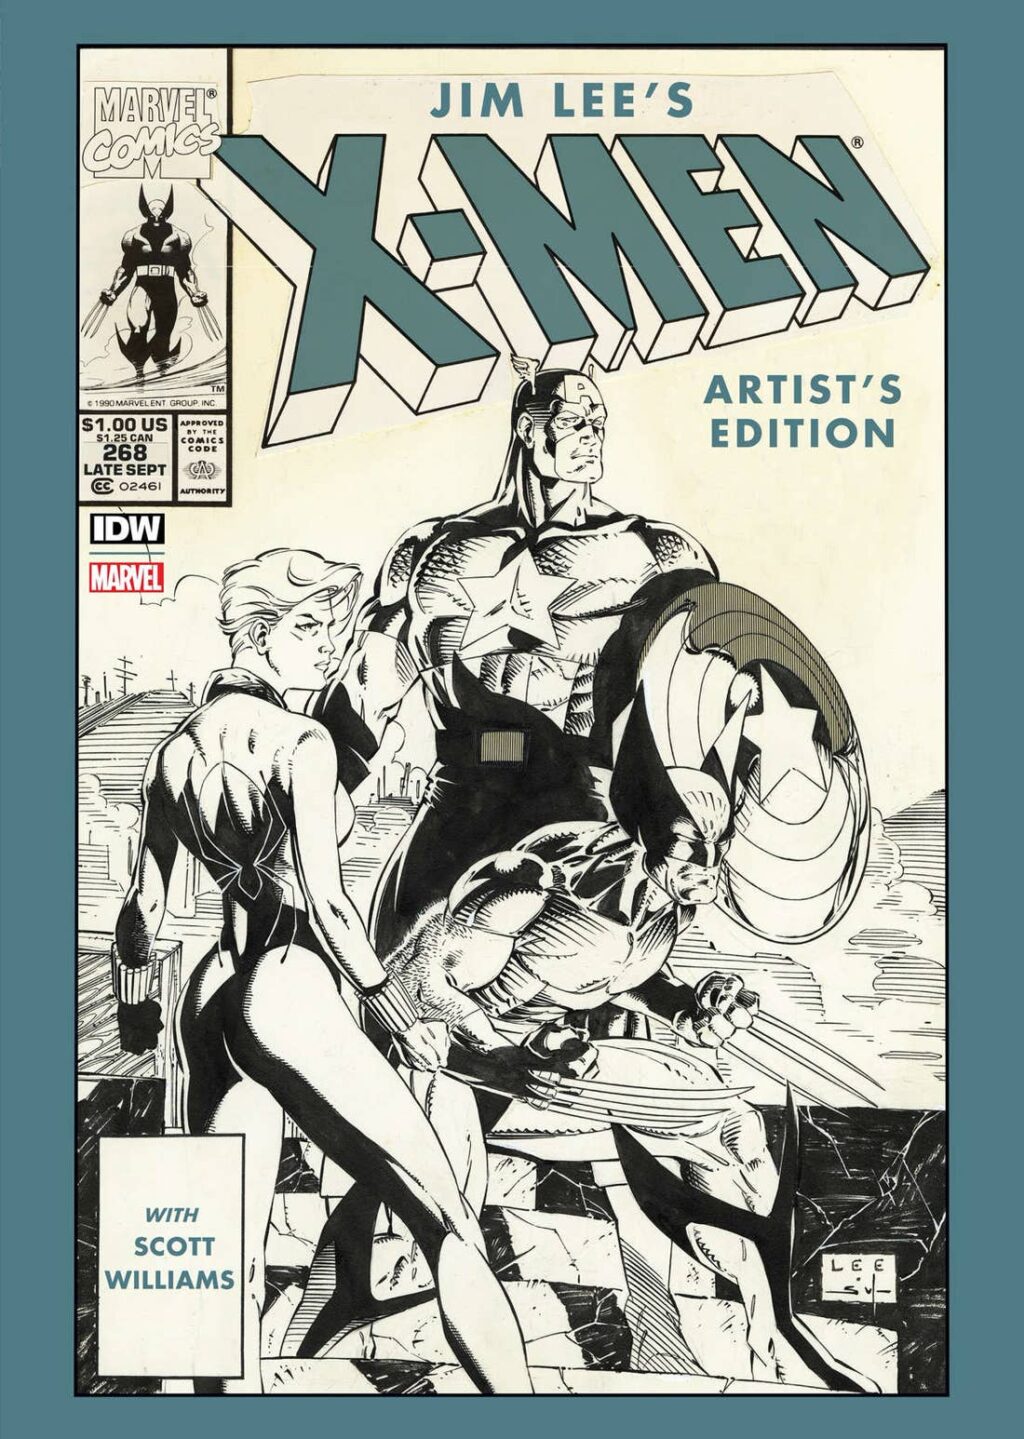 Jim Lees X Men Artists Edition cover